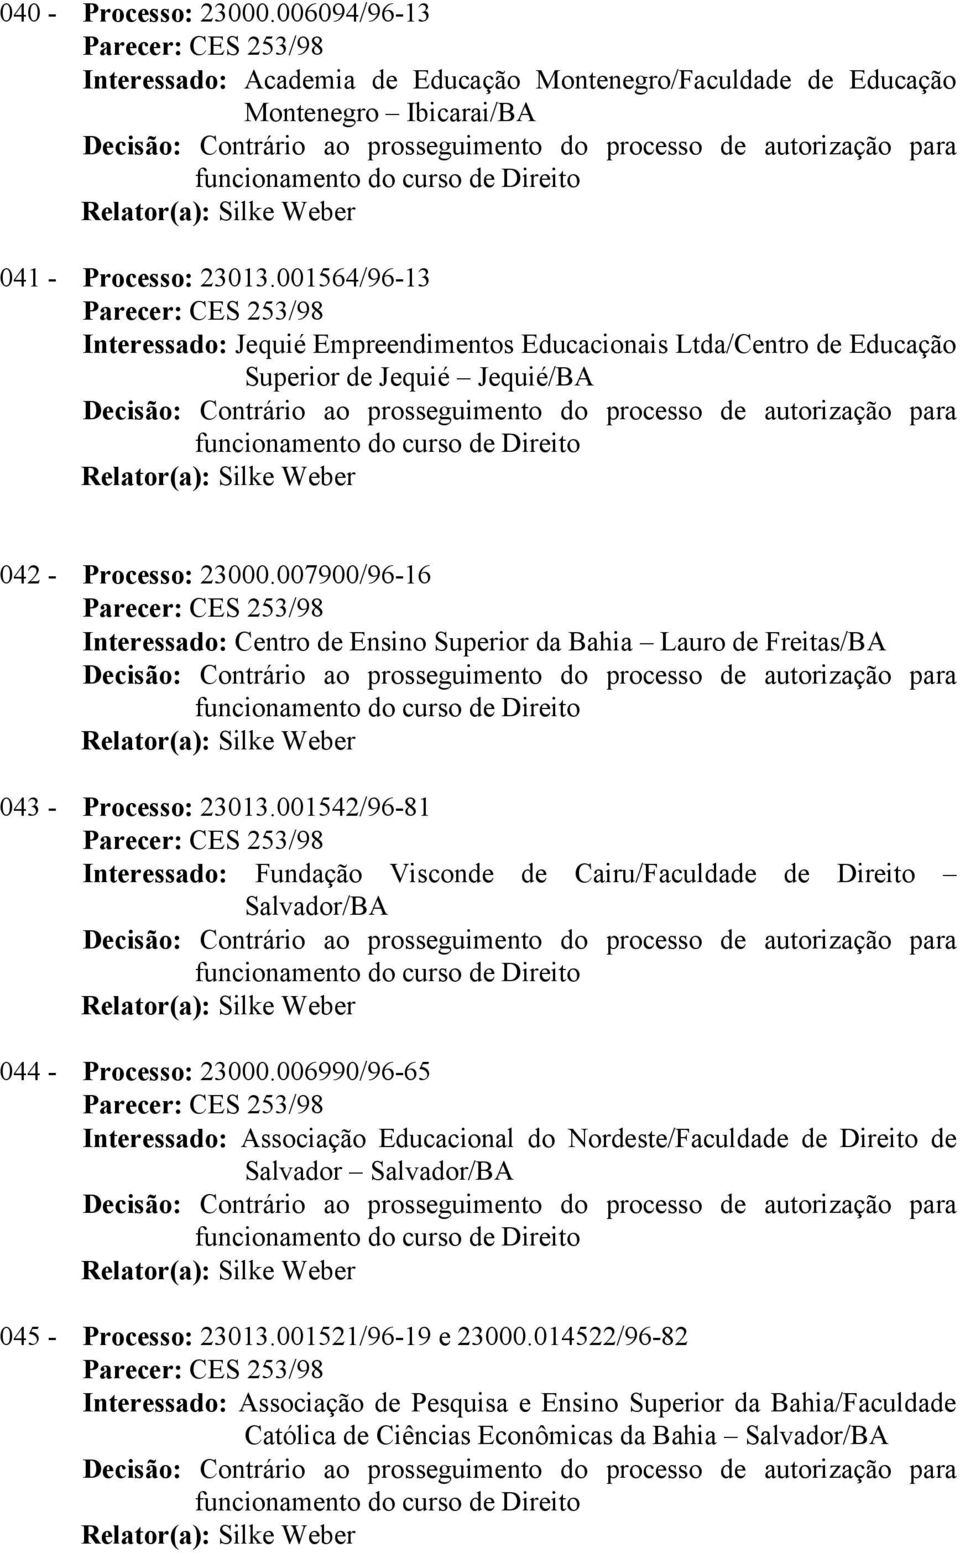 007900/96-16 Interessado: Centro de Ensino Superior da Bahia Lauro de Freitas/BA 043 - Processo: 23013.